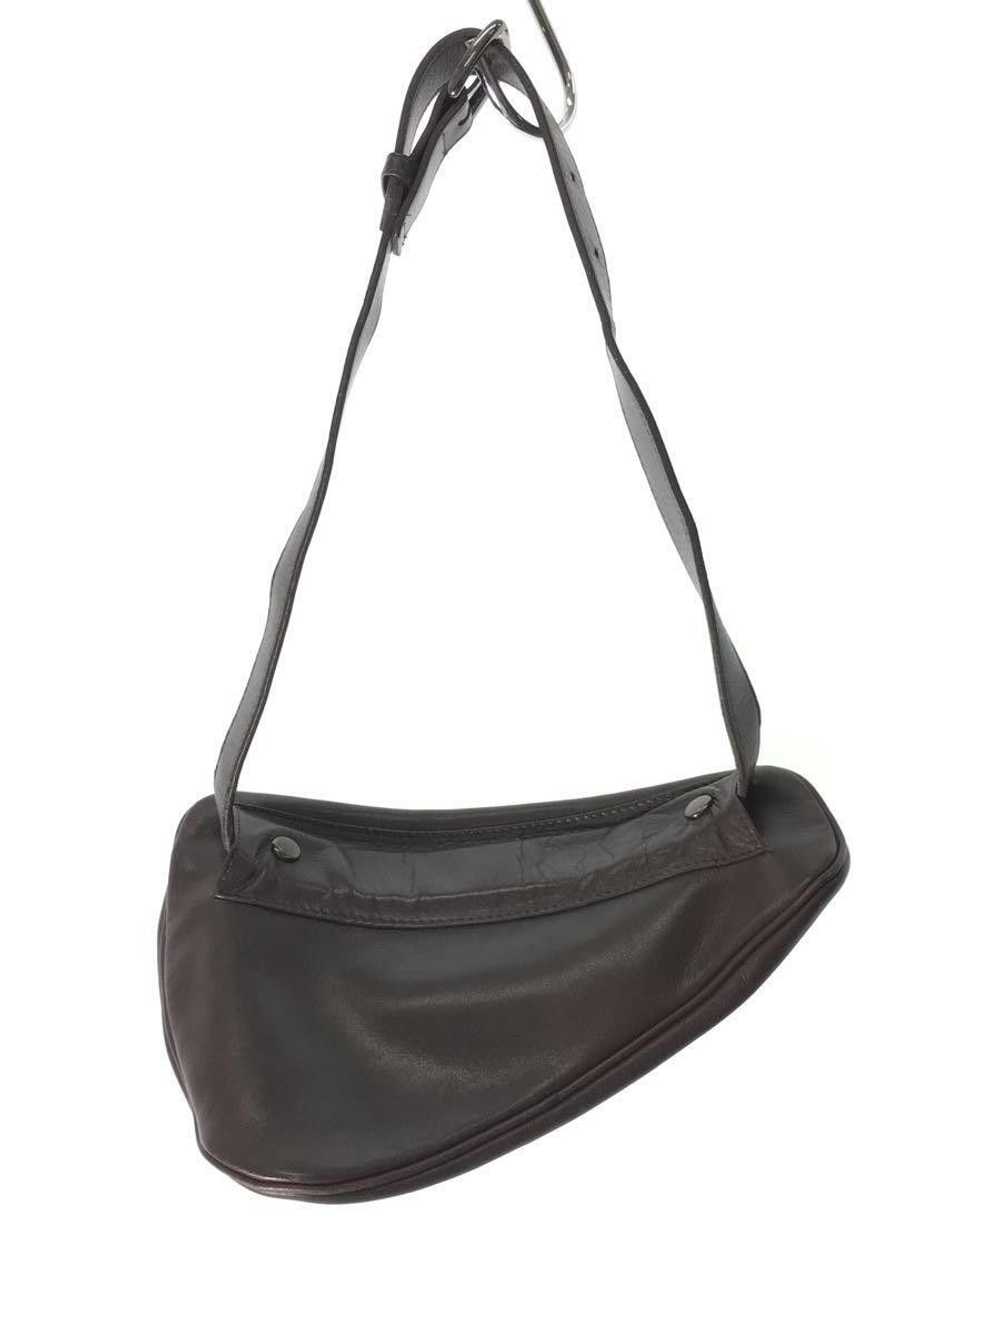 Issey Miyake Triangle Leather Shoulder Bag - image 3